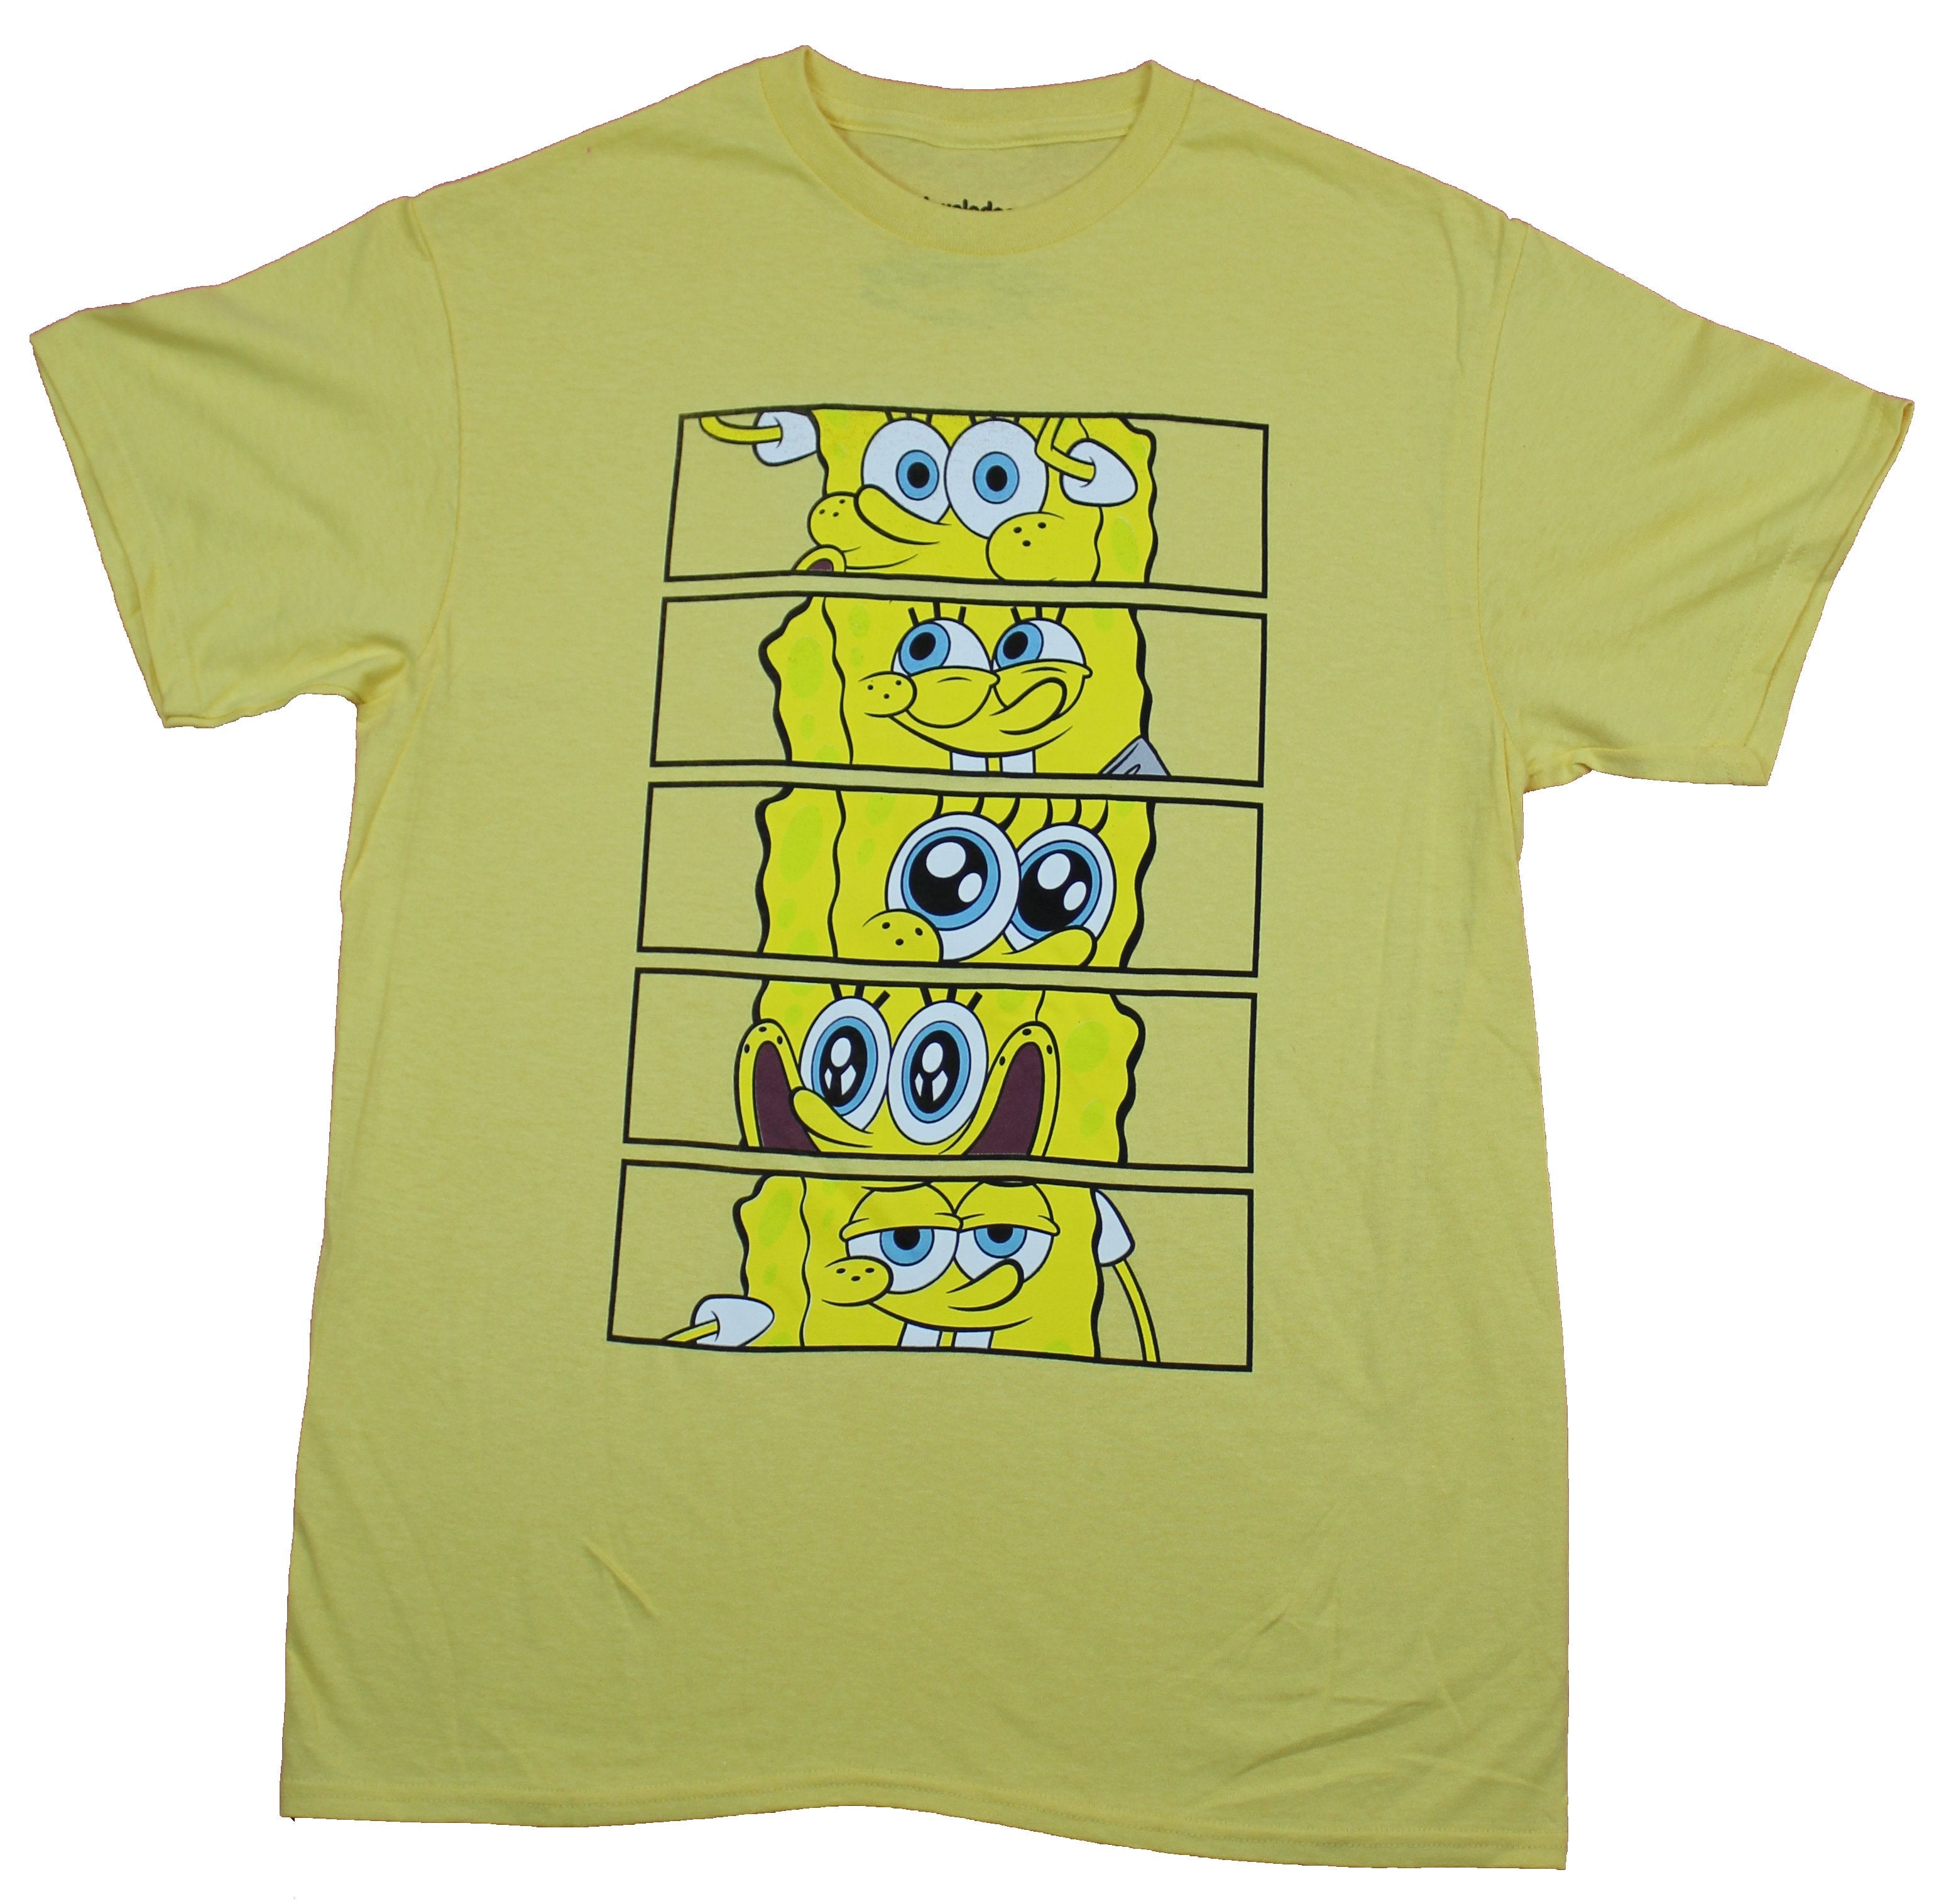 Spongebob Squarepants Mens T-Shirt  - Crazy Emotions Face Box Images